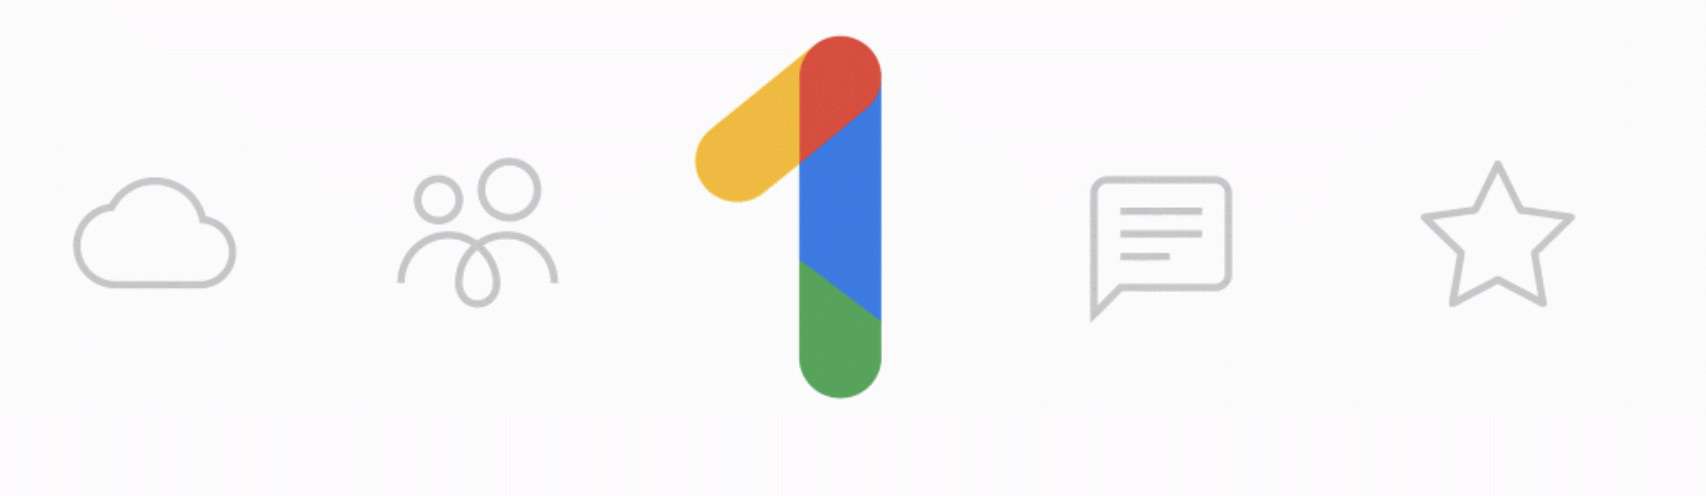 Google Drive devient Google One